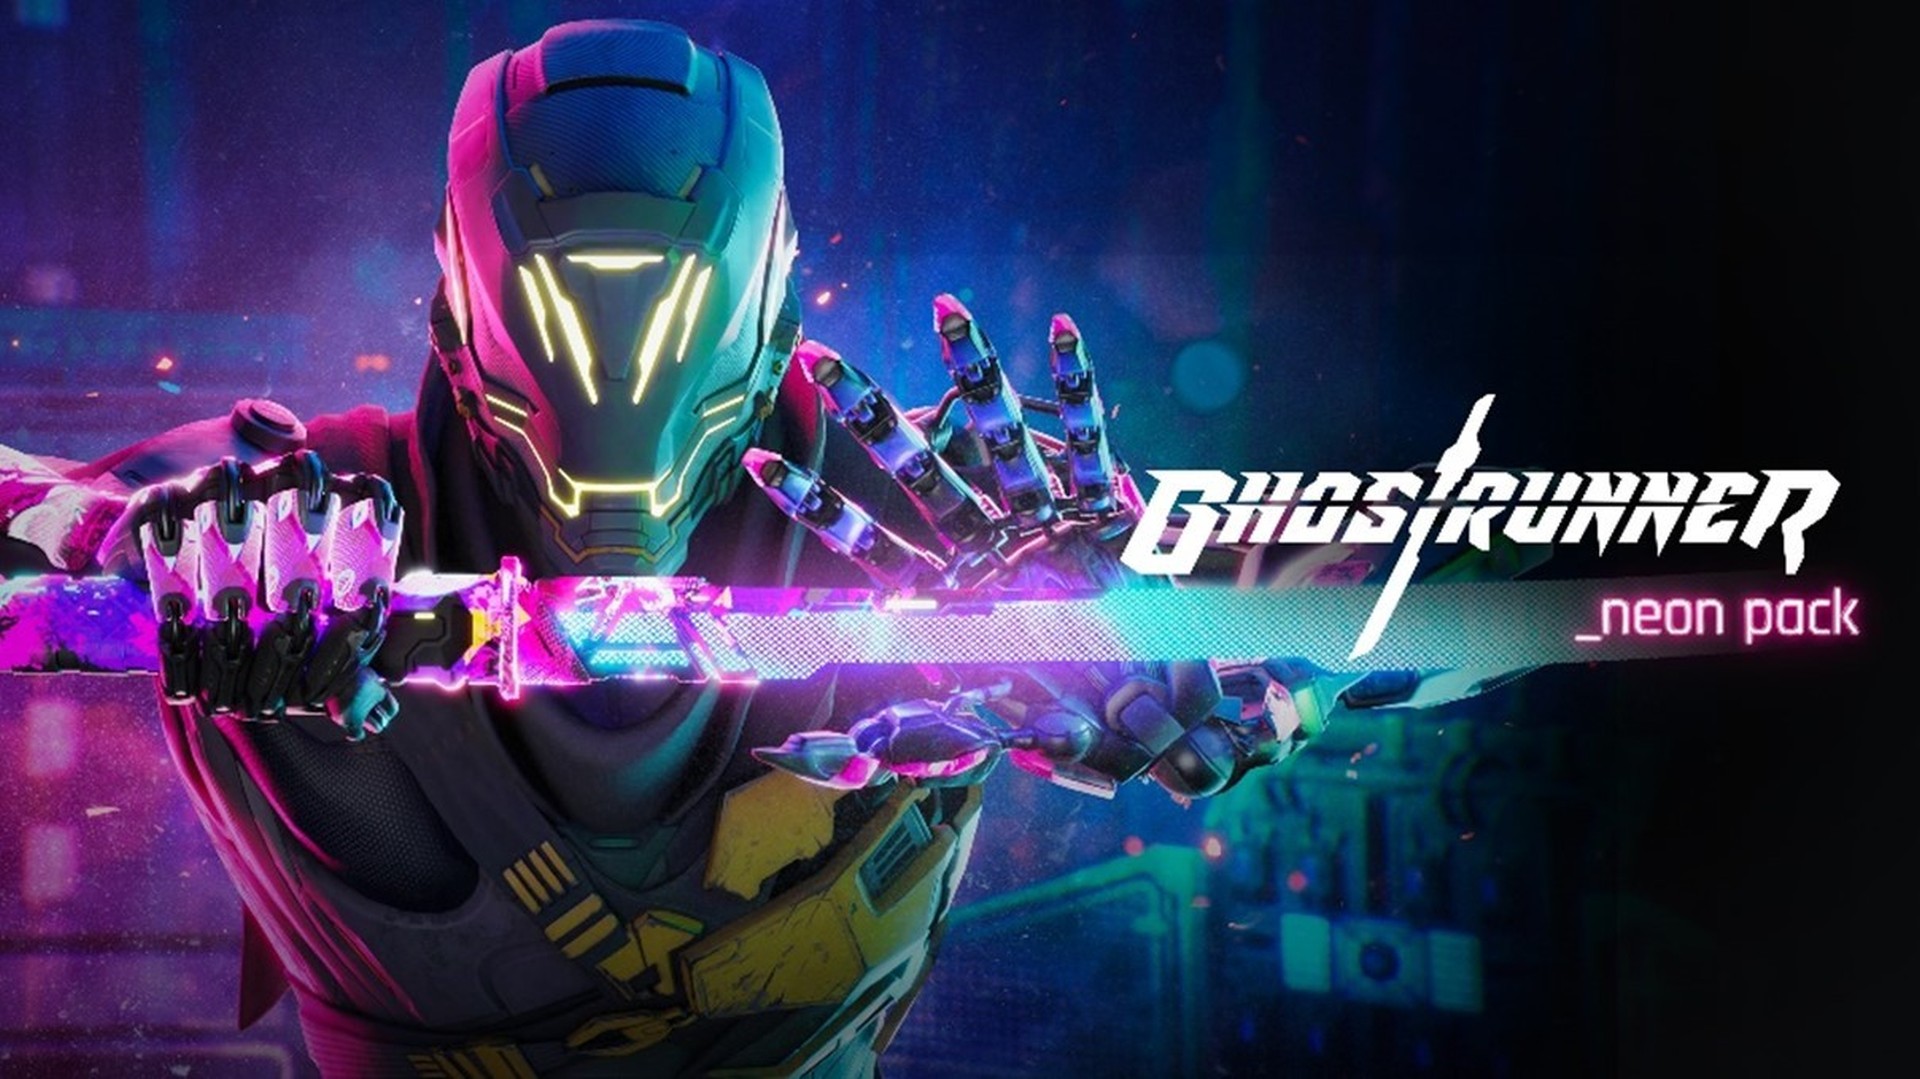 Ghostrunner - Neon Pack DLC Hero